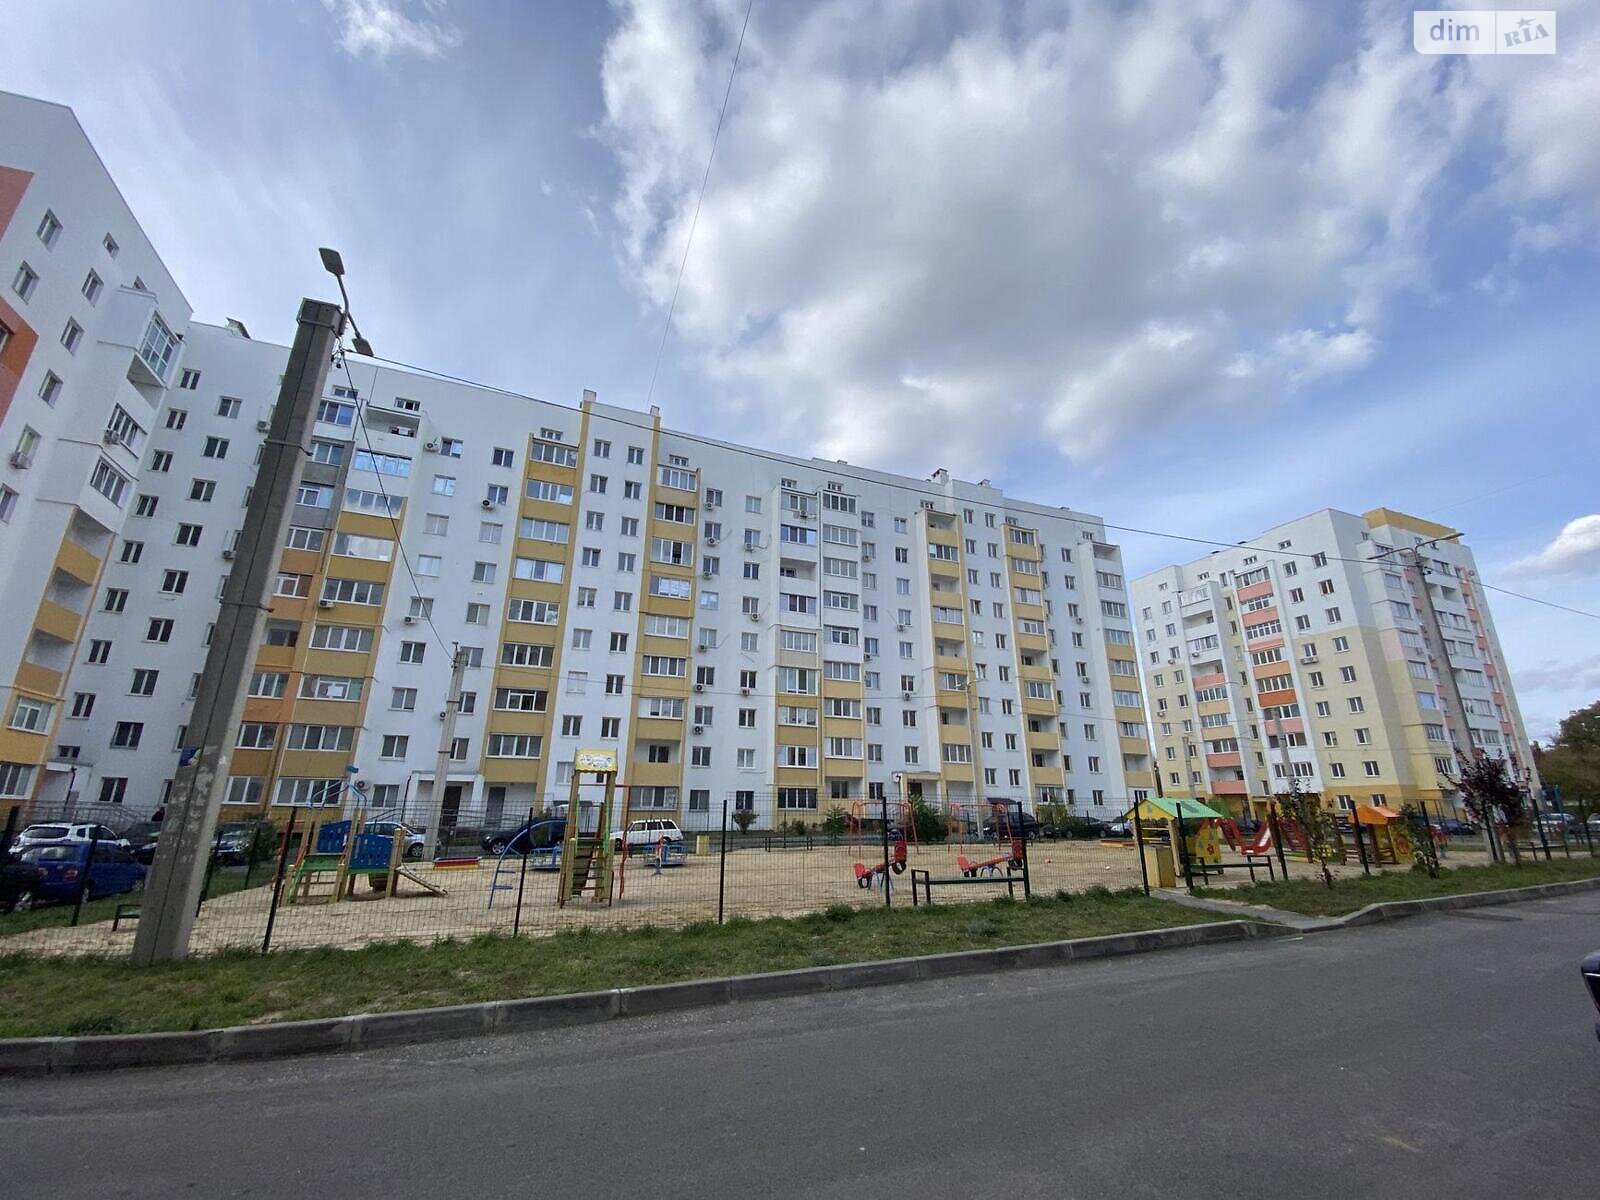 Продажа однокомнатной квартиры в Харькове, на ул. Мира 27, район ХТЗ фото 1